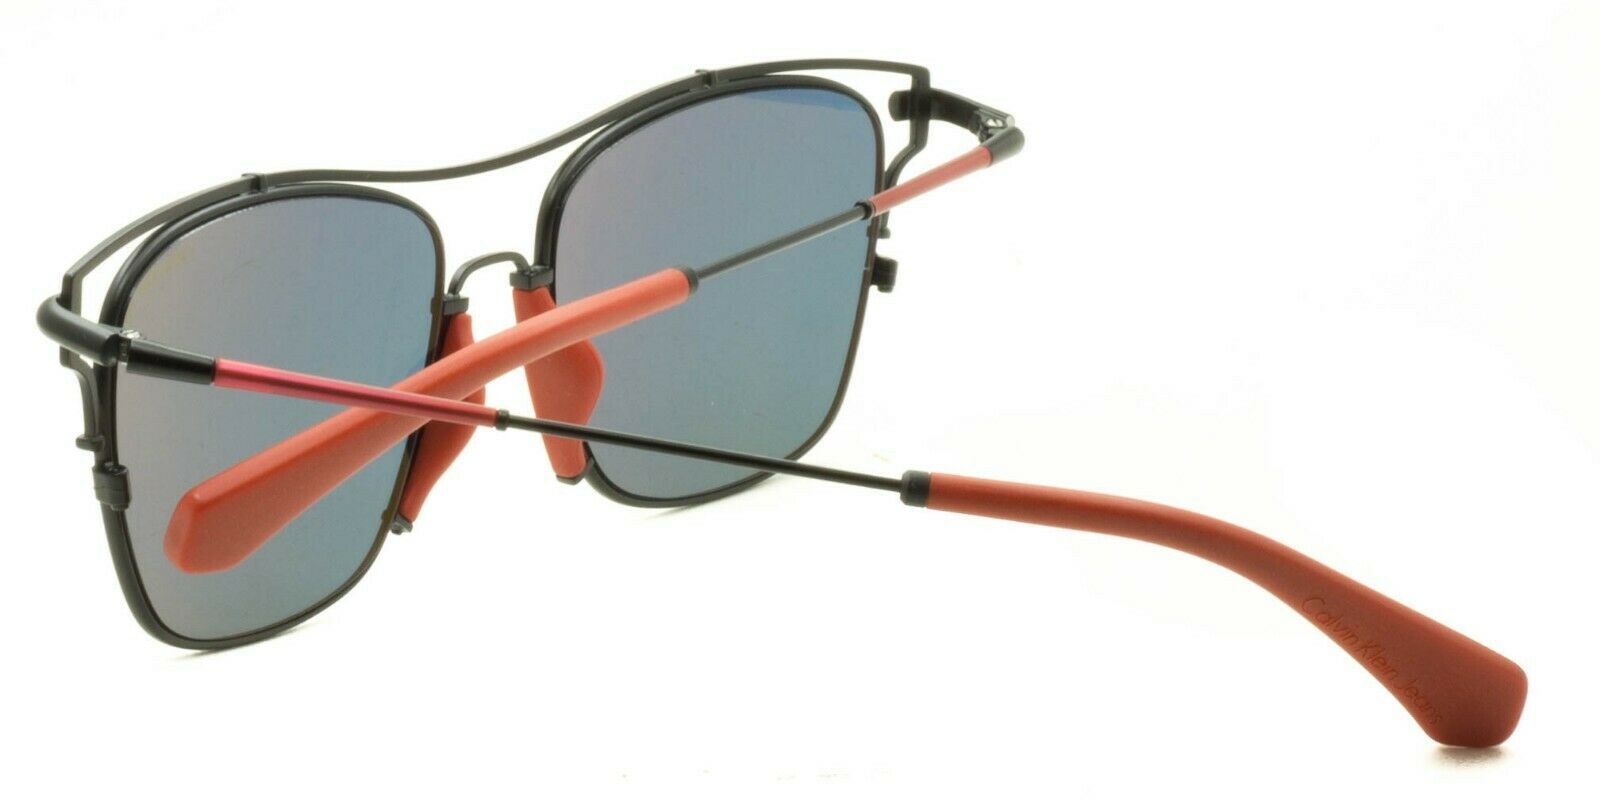 CALVIN KLEIN JEANS CKJ166S 002 55mm Sunglasses Shades Glasses New - BNIB